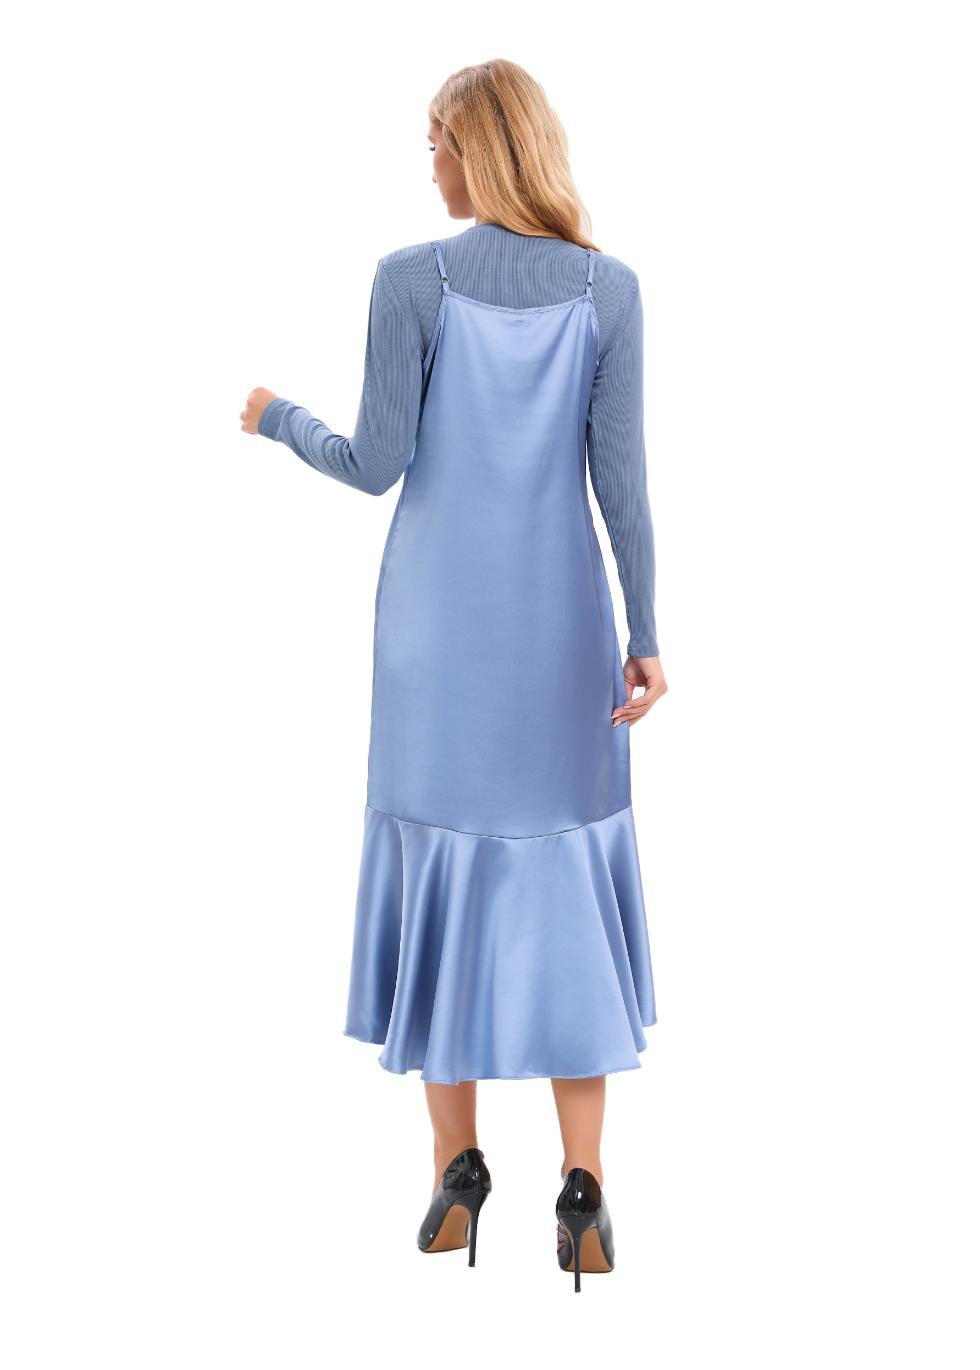 Satin Blue Midi Slip Dress Outfit Set